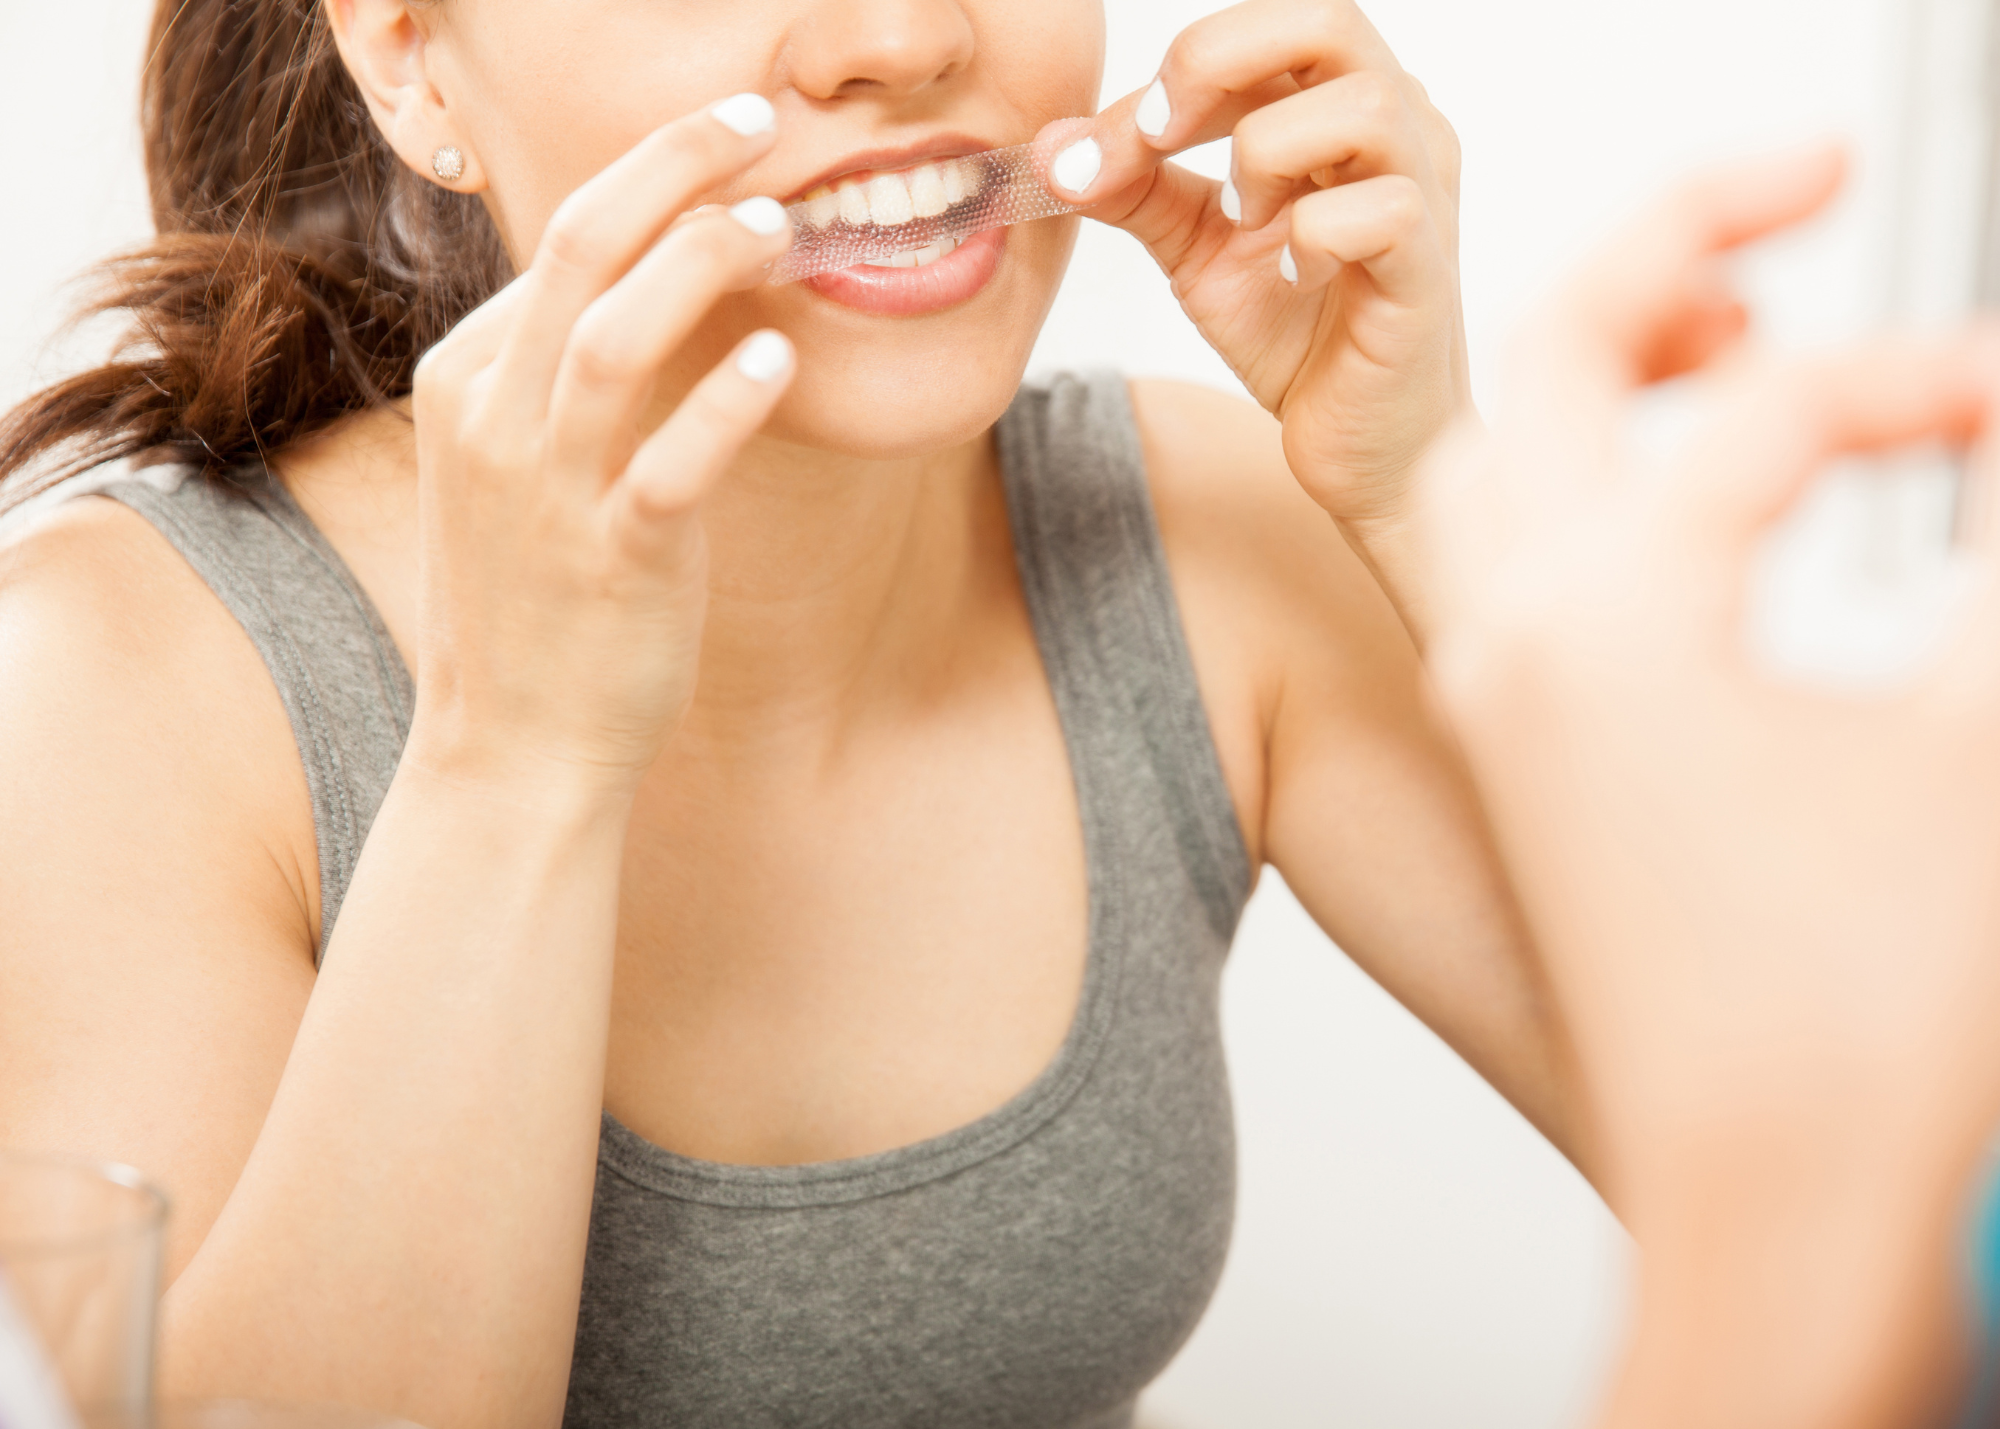 The Perfect Smile: Gifting MySmile Teeth Whitening Strips